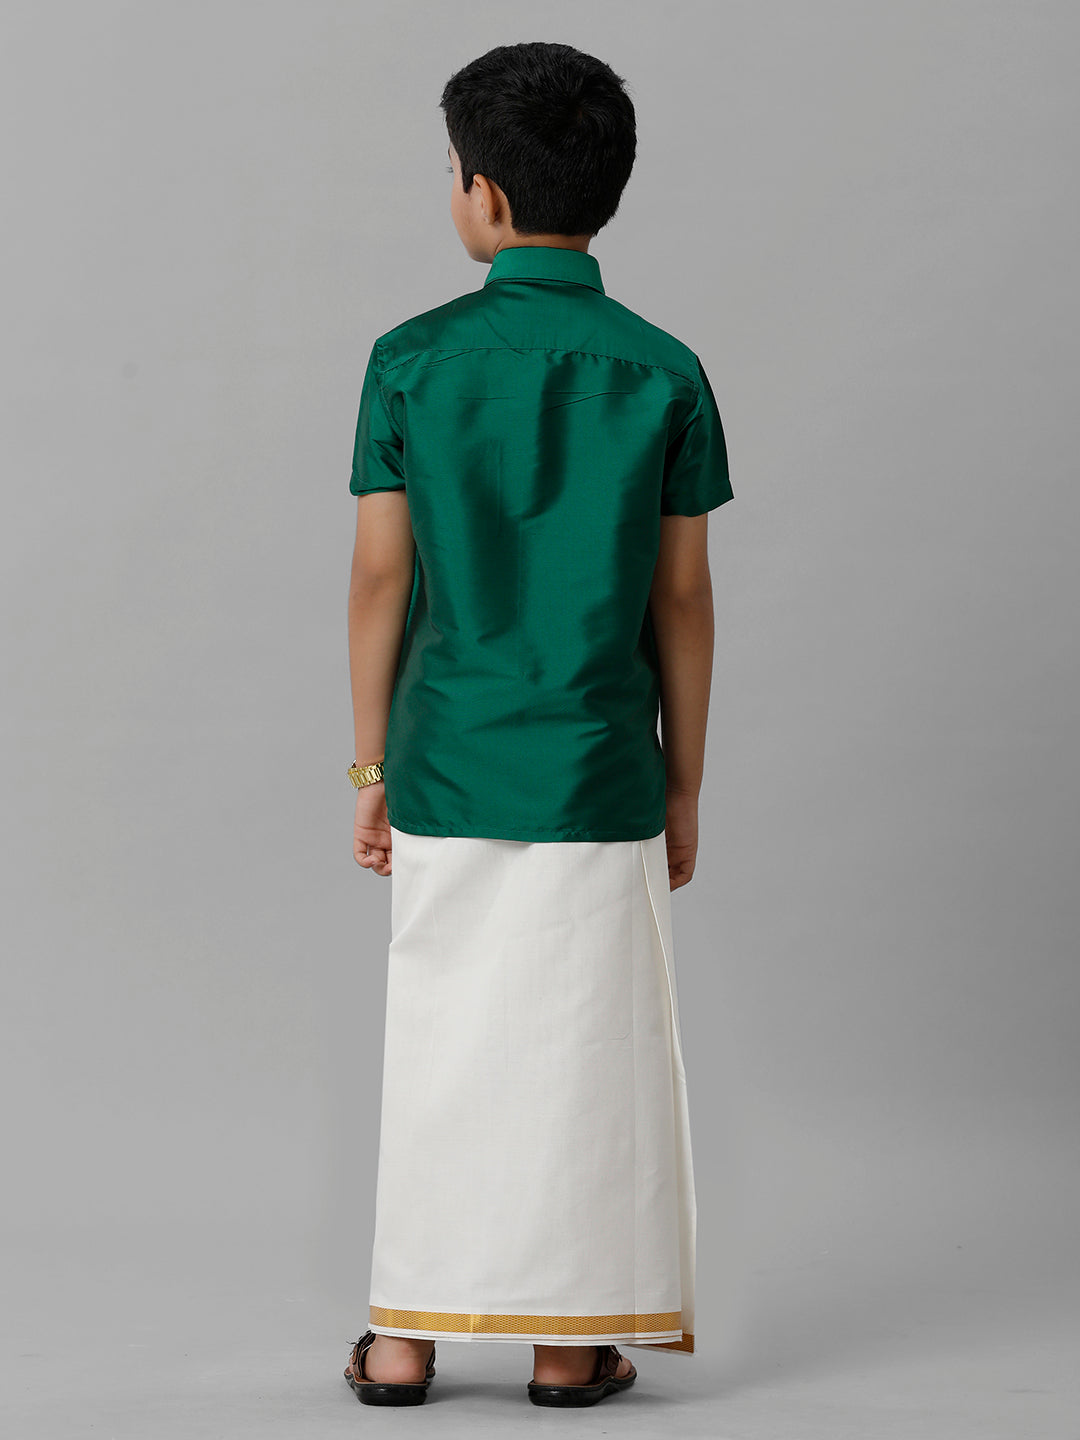 Boys Silk Cotton Shirt with Dhoti Set Green-Back view